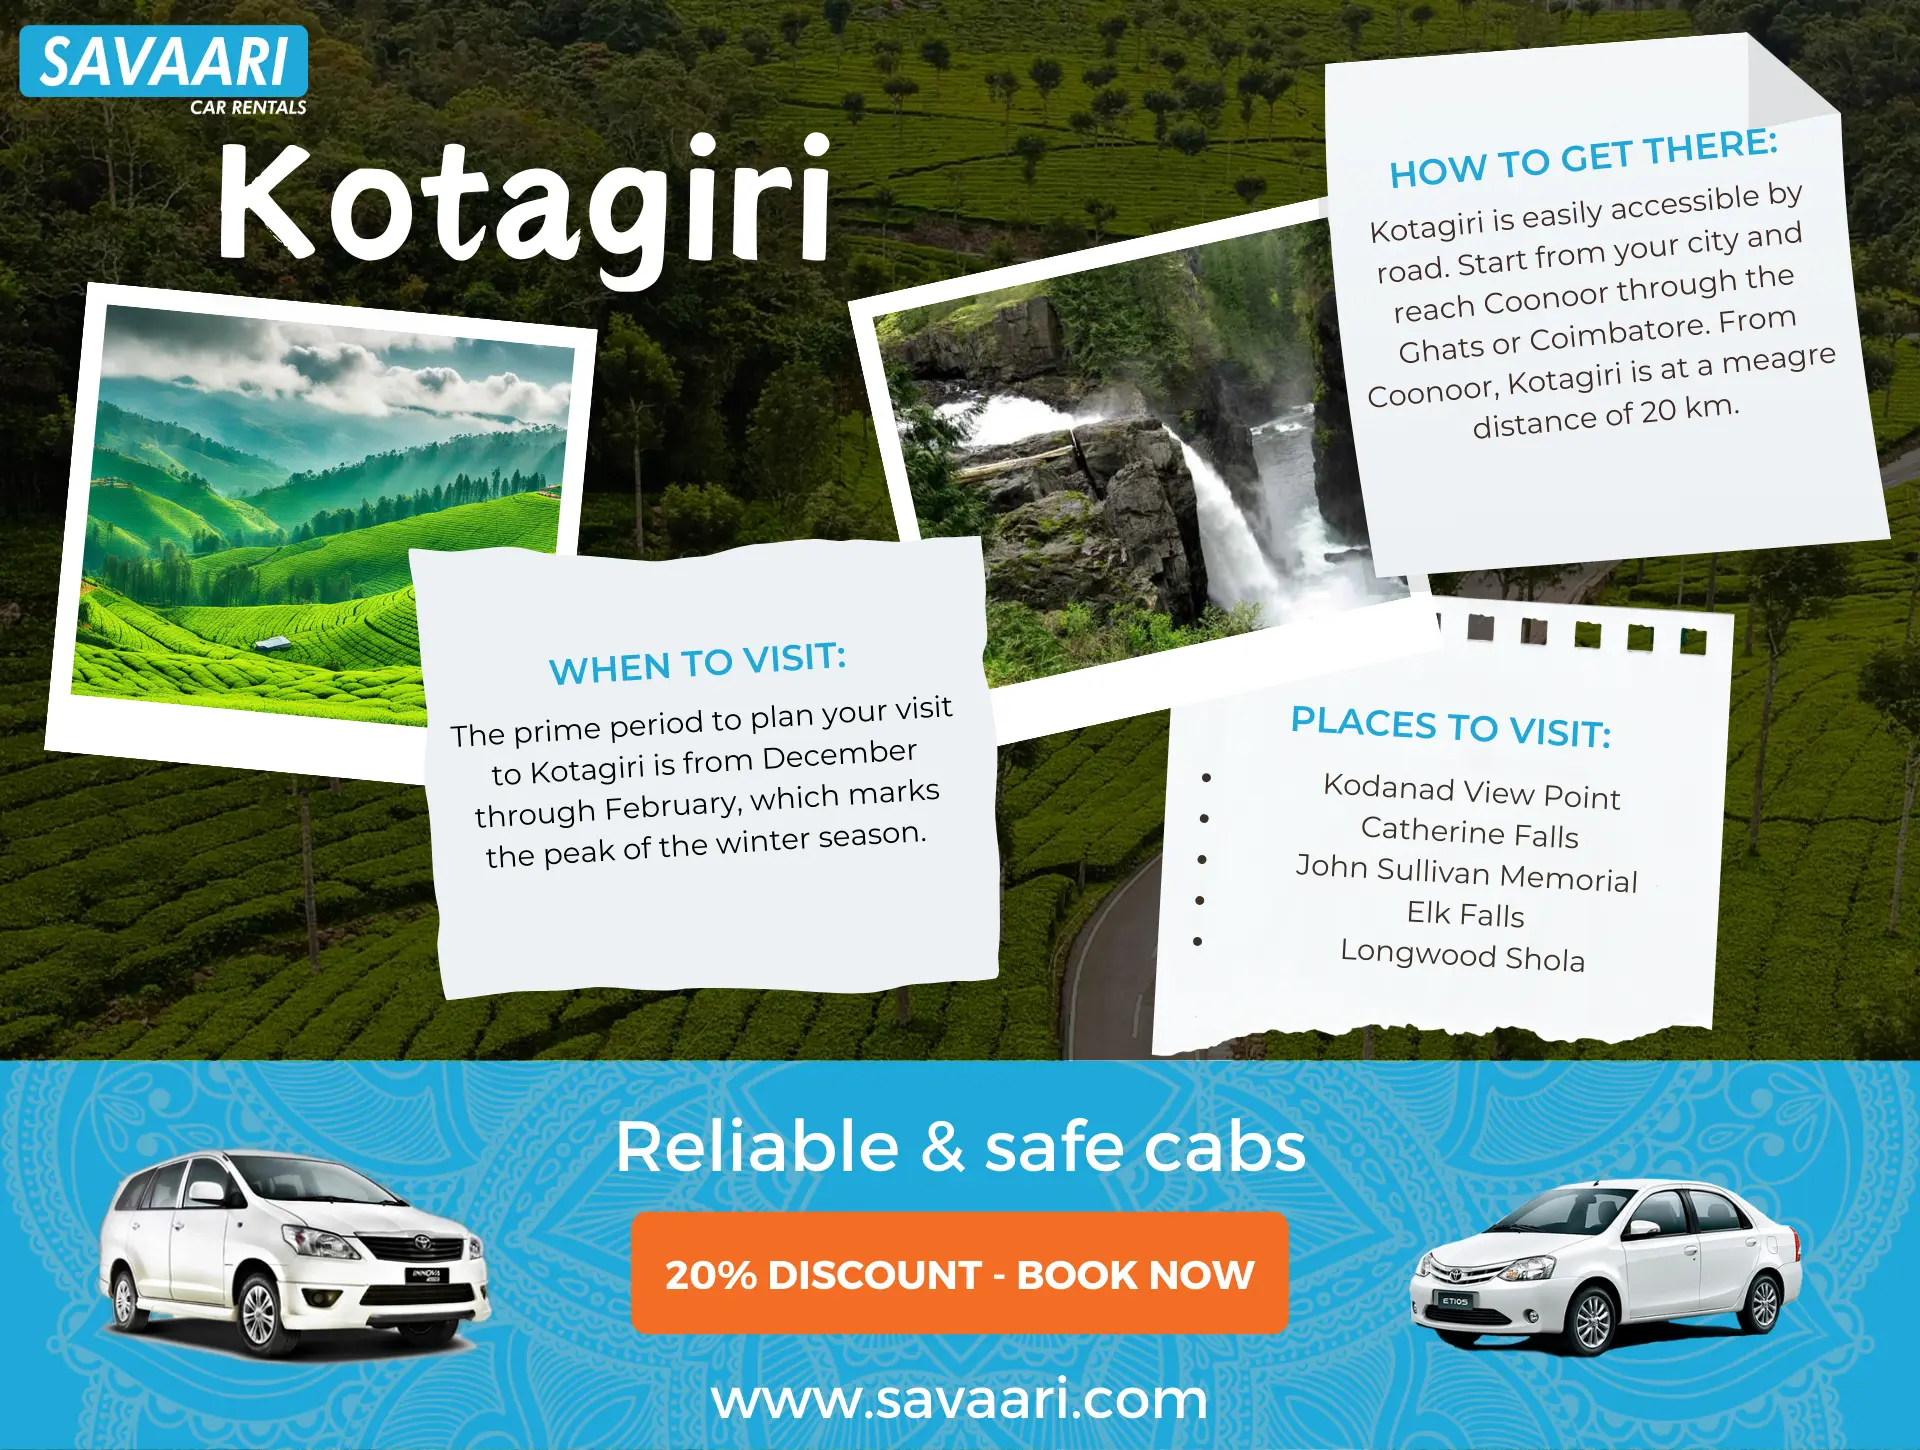 Things to do in Kotagiri